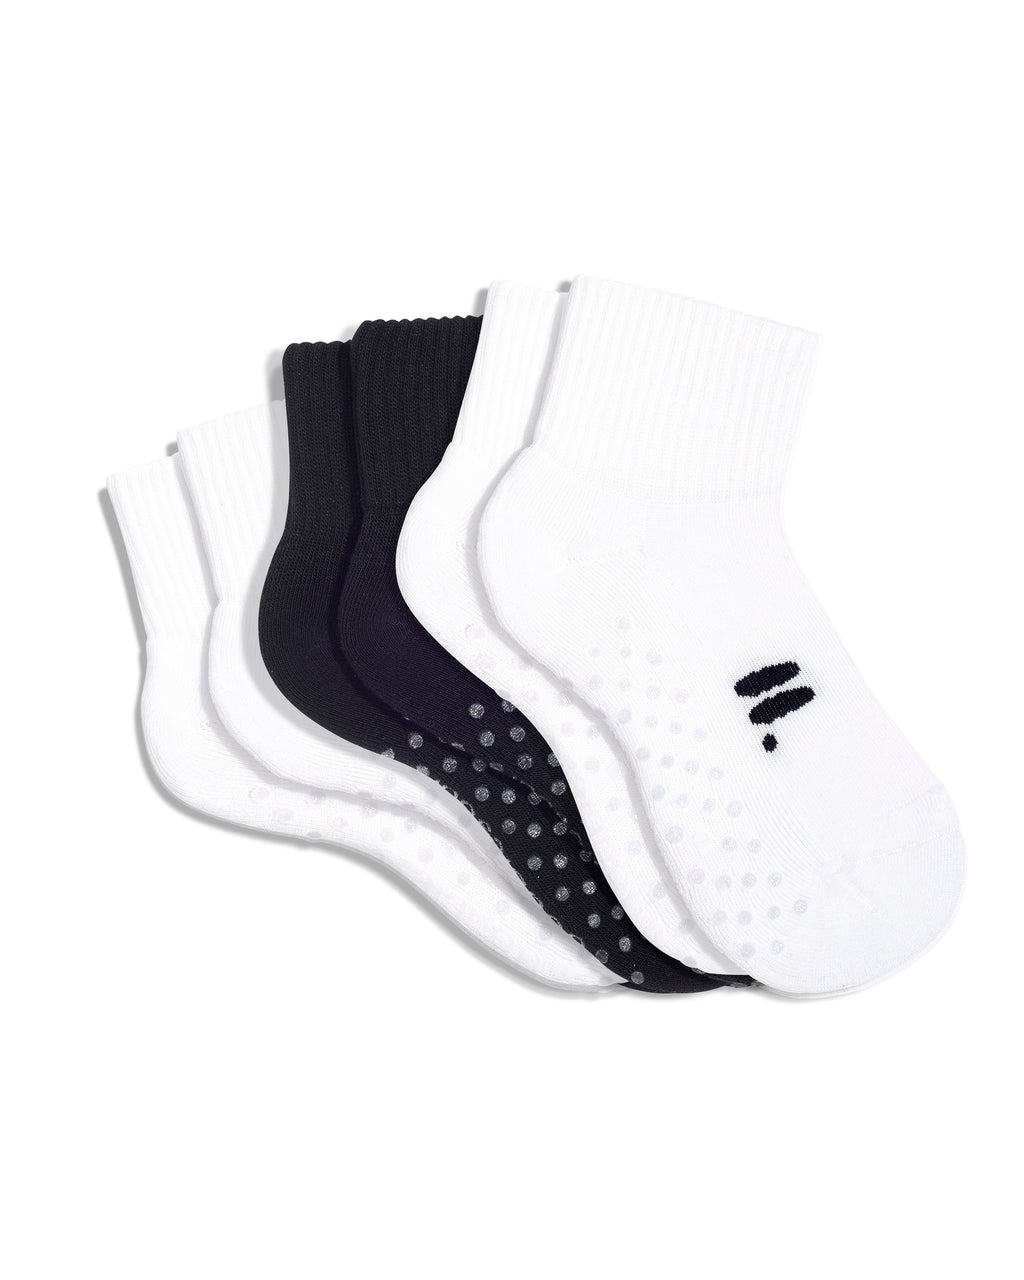 Low Rise 3-Pack Bundle Grip Socks - Solids (Barre / Pilates) - ShopperBoard